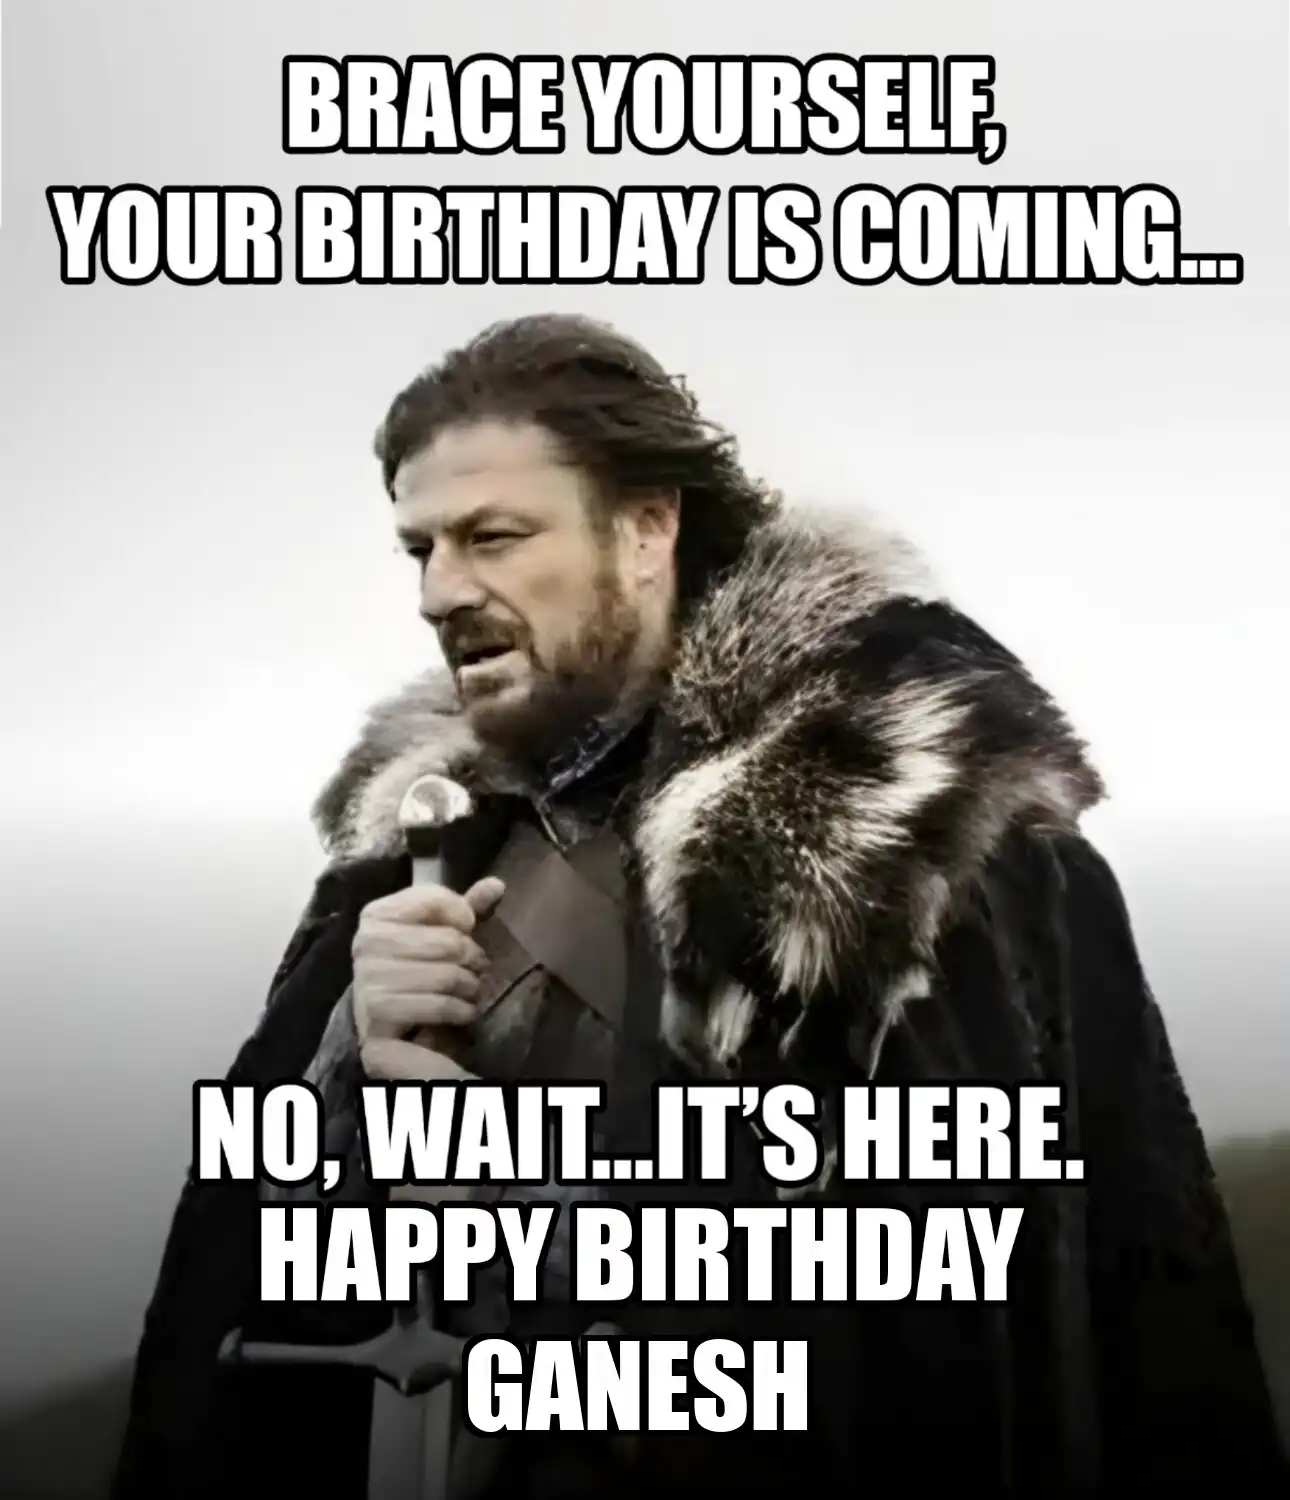 Happy Birthday Ganesh Brace Yourself Your Birthday Is Coming Meme